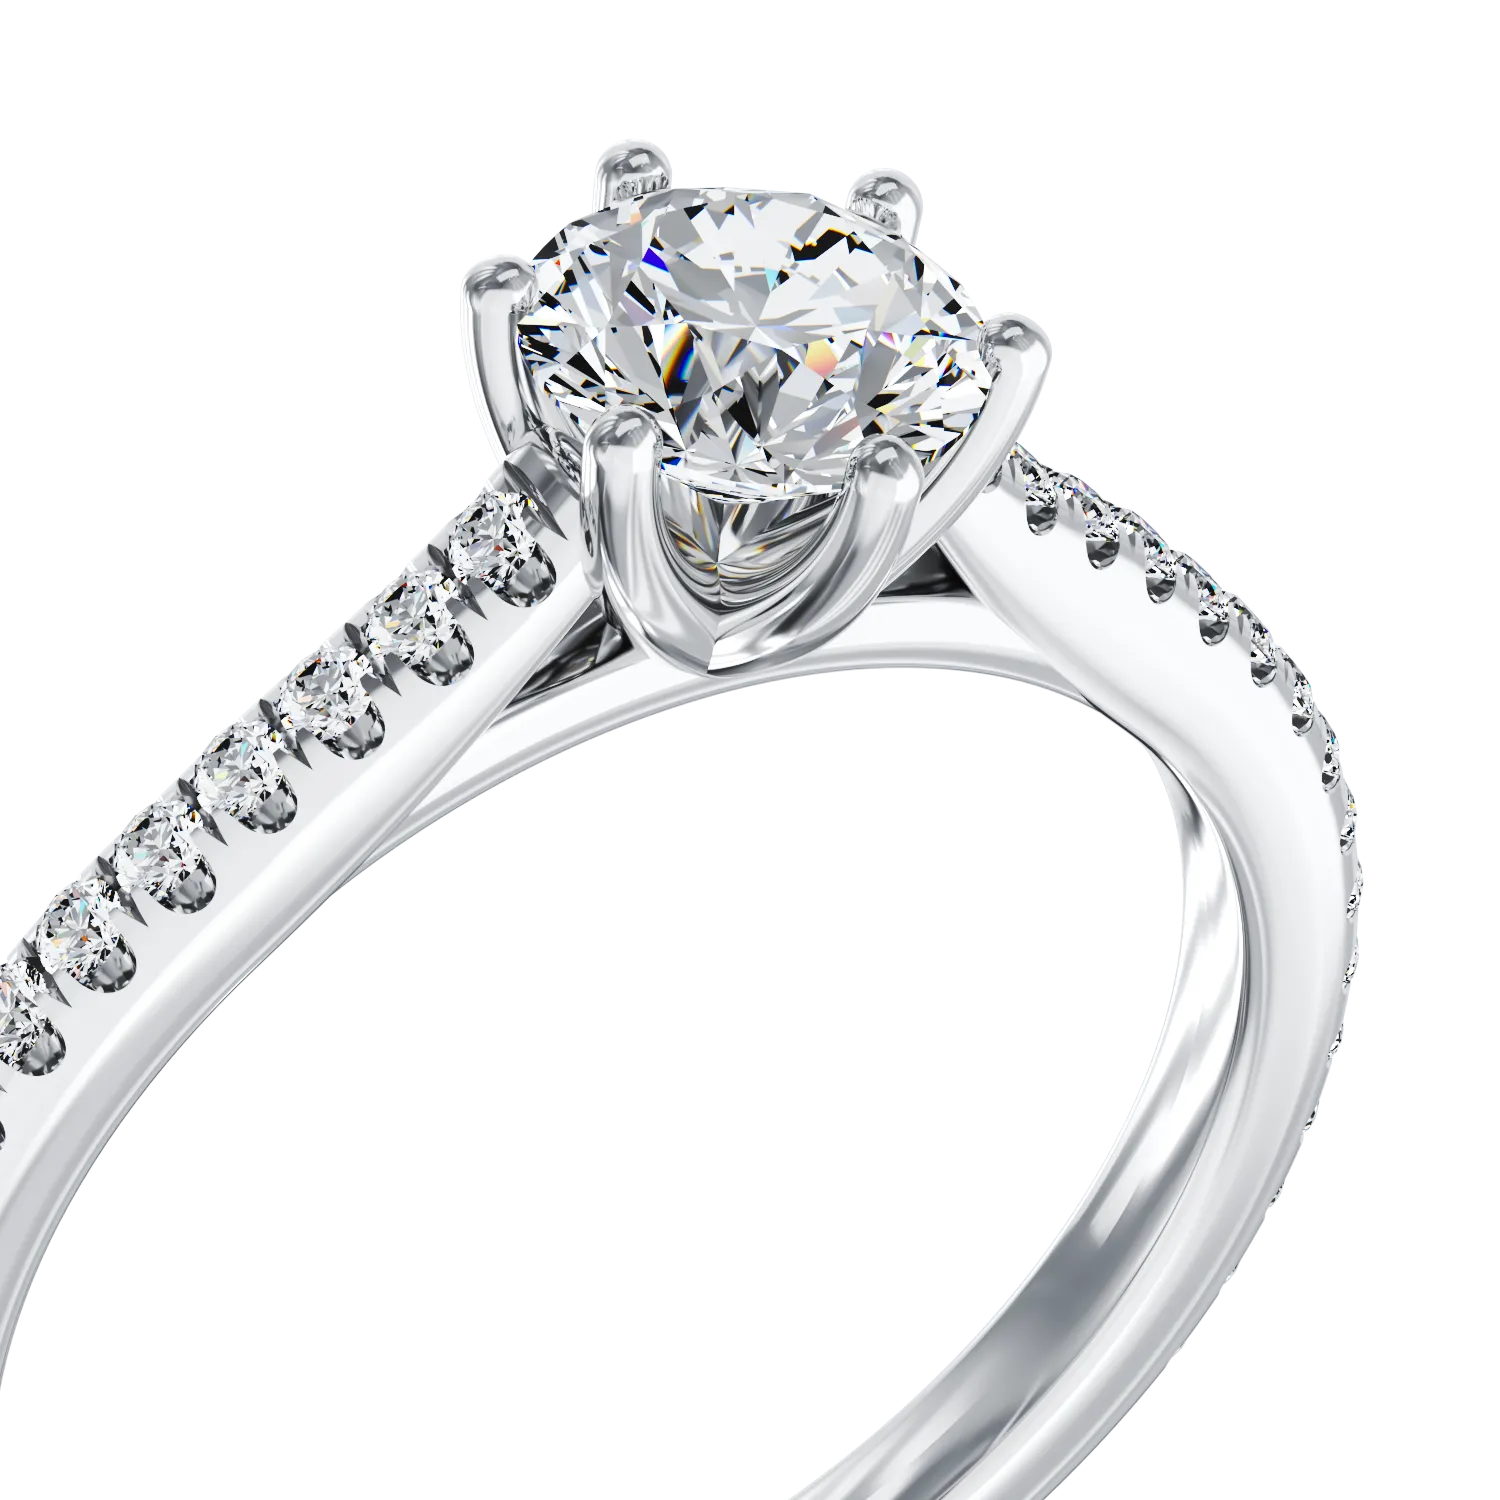 Platinum engagement ring with 0.6ct diamond and 0.18ct diamonds